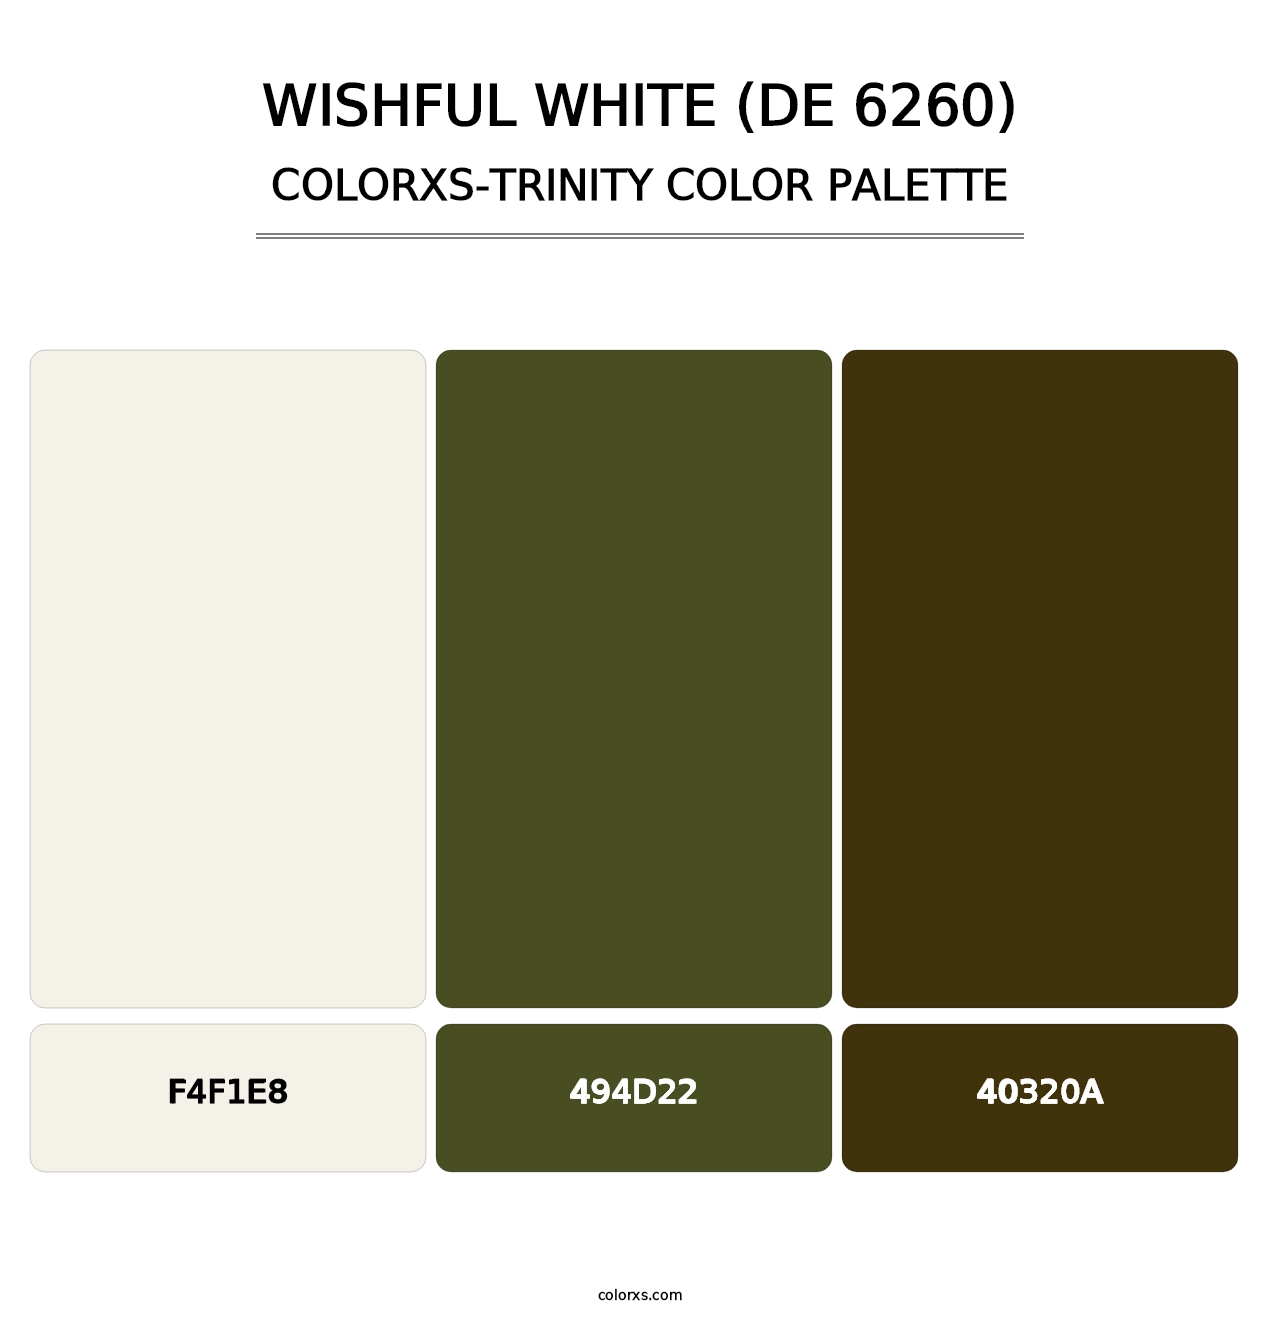 Wishful White (DE 6260) - Colorxs Trinity Palette